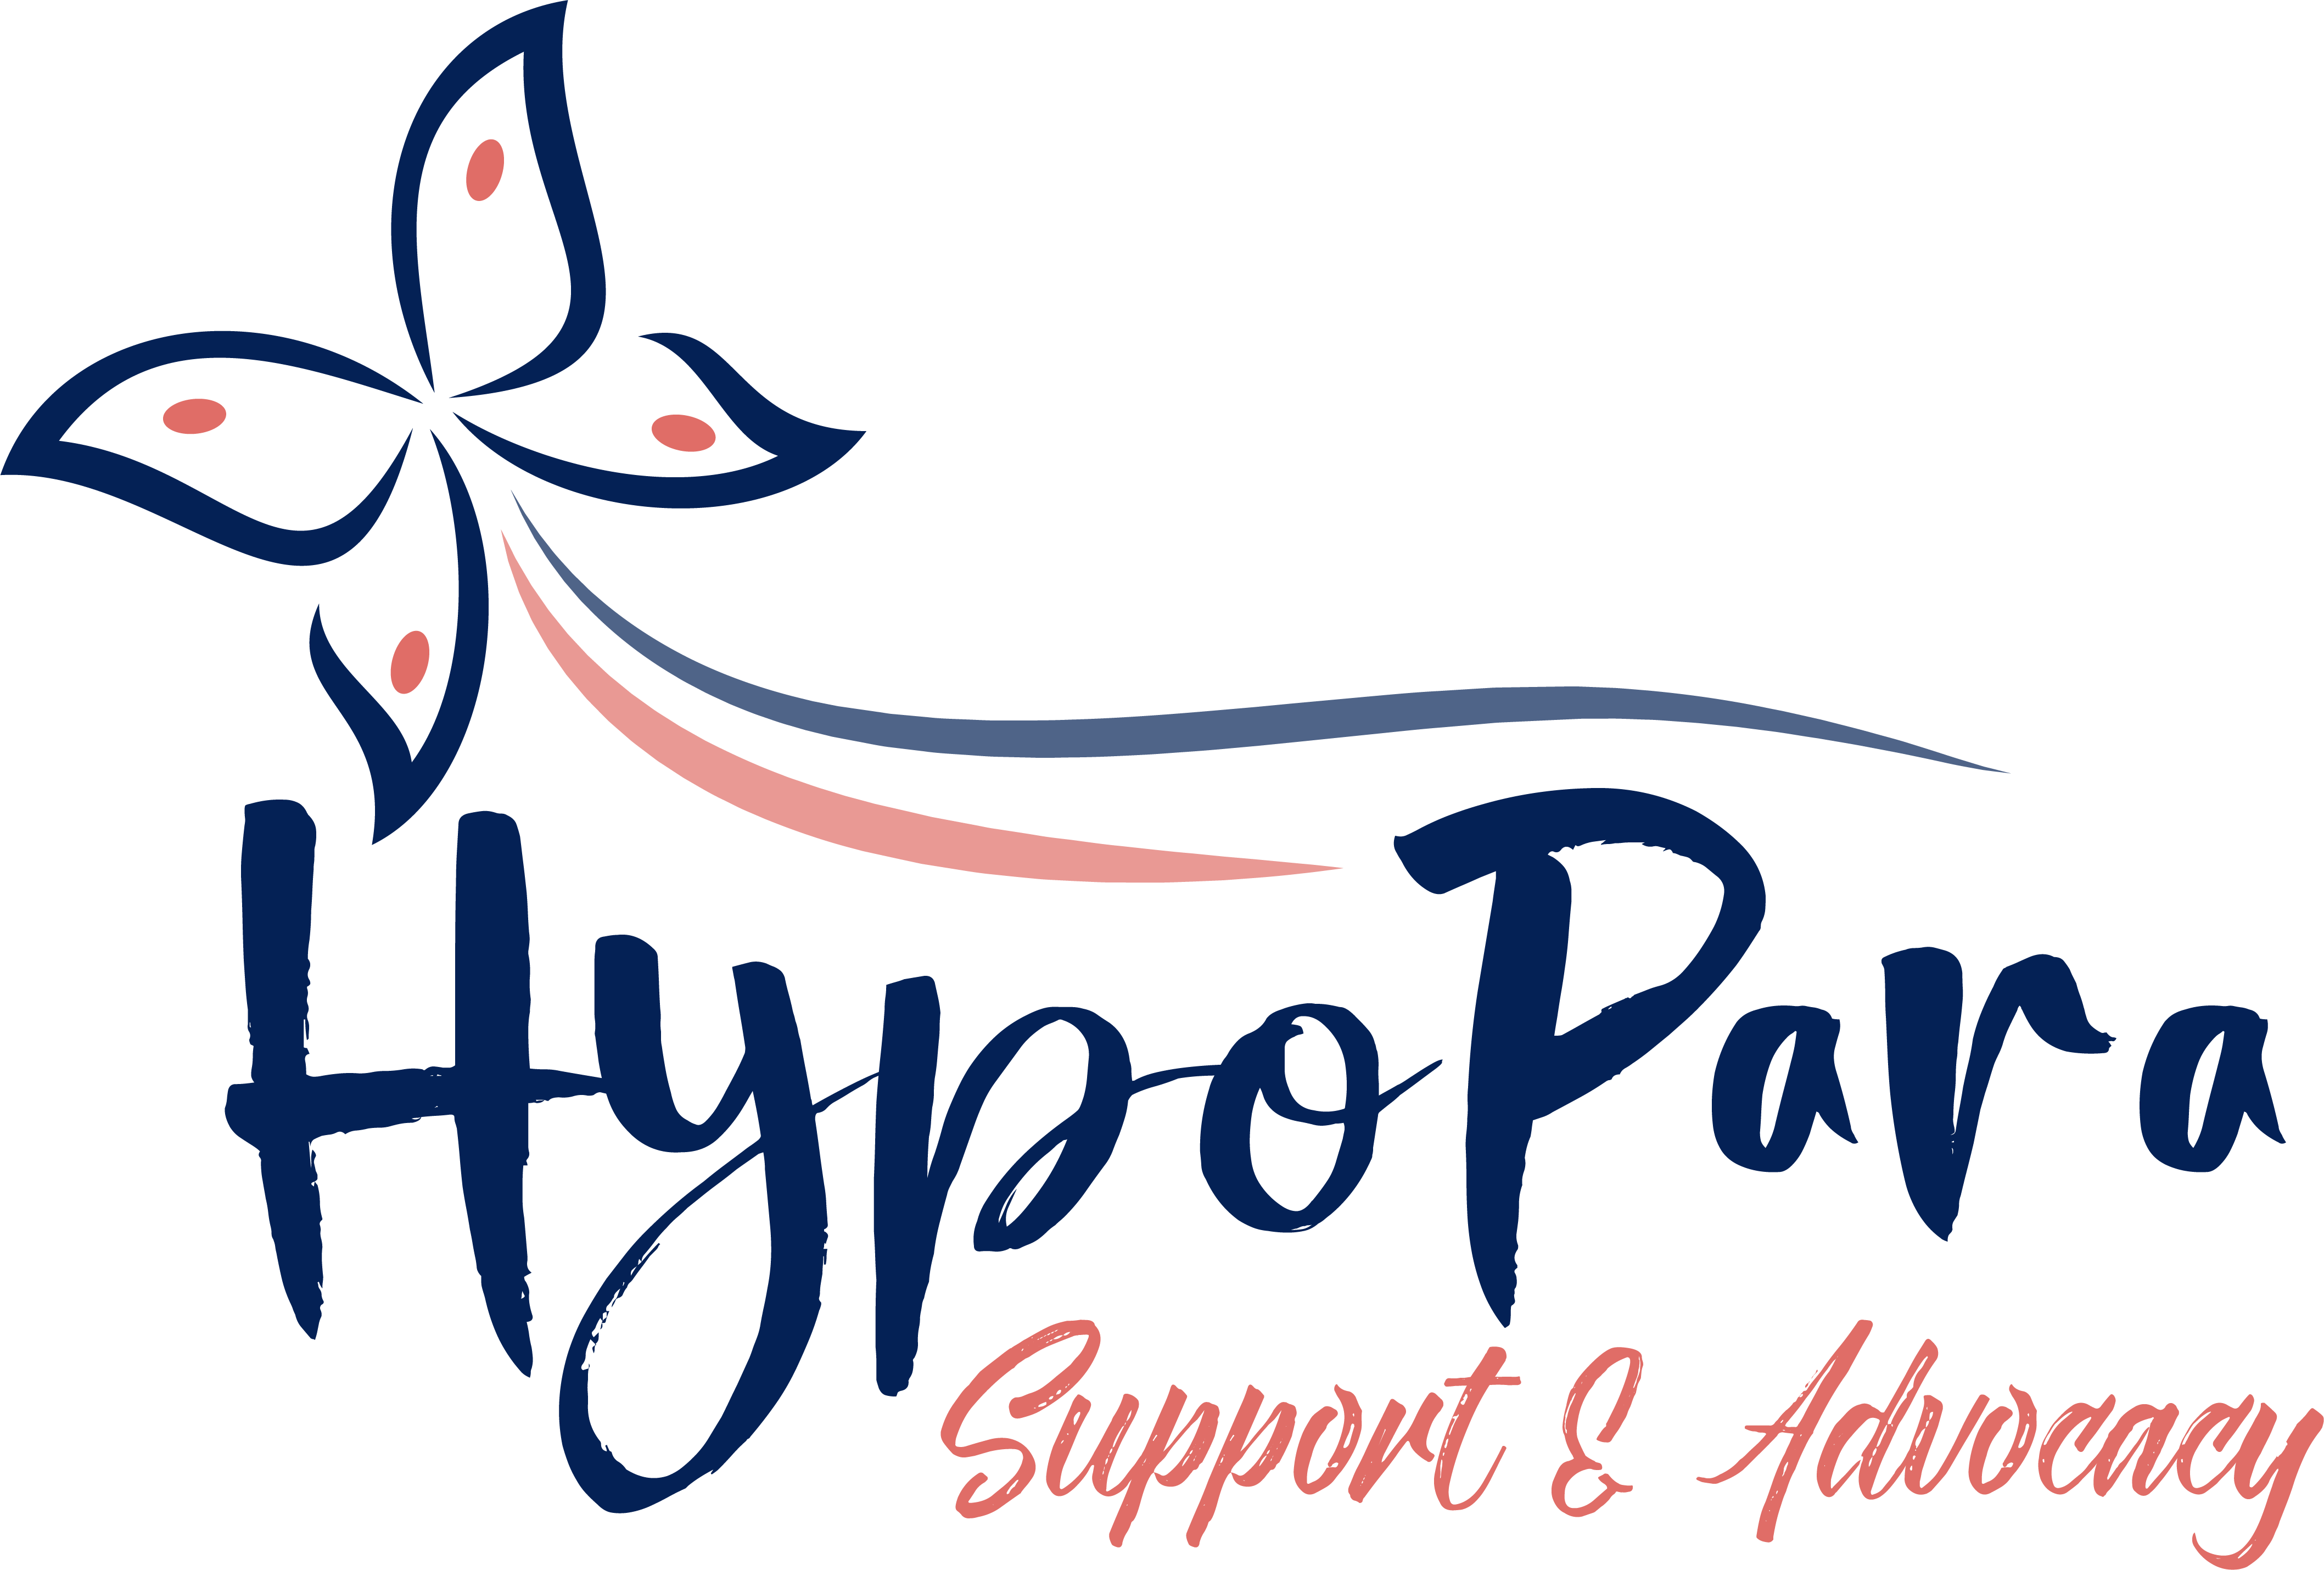 HypoPara Support & Advocacy Inc logo